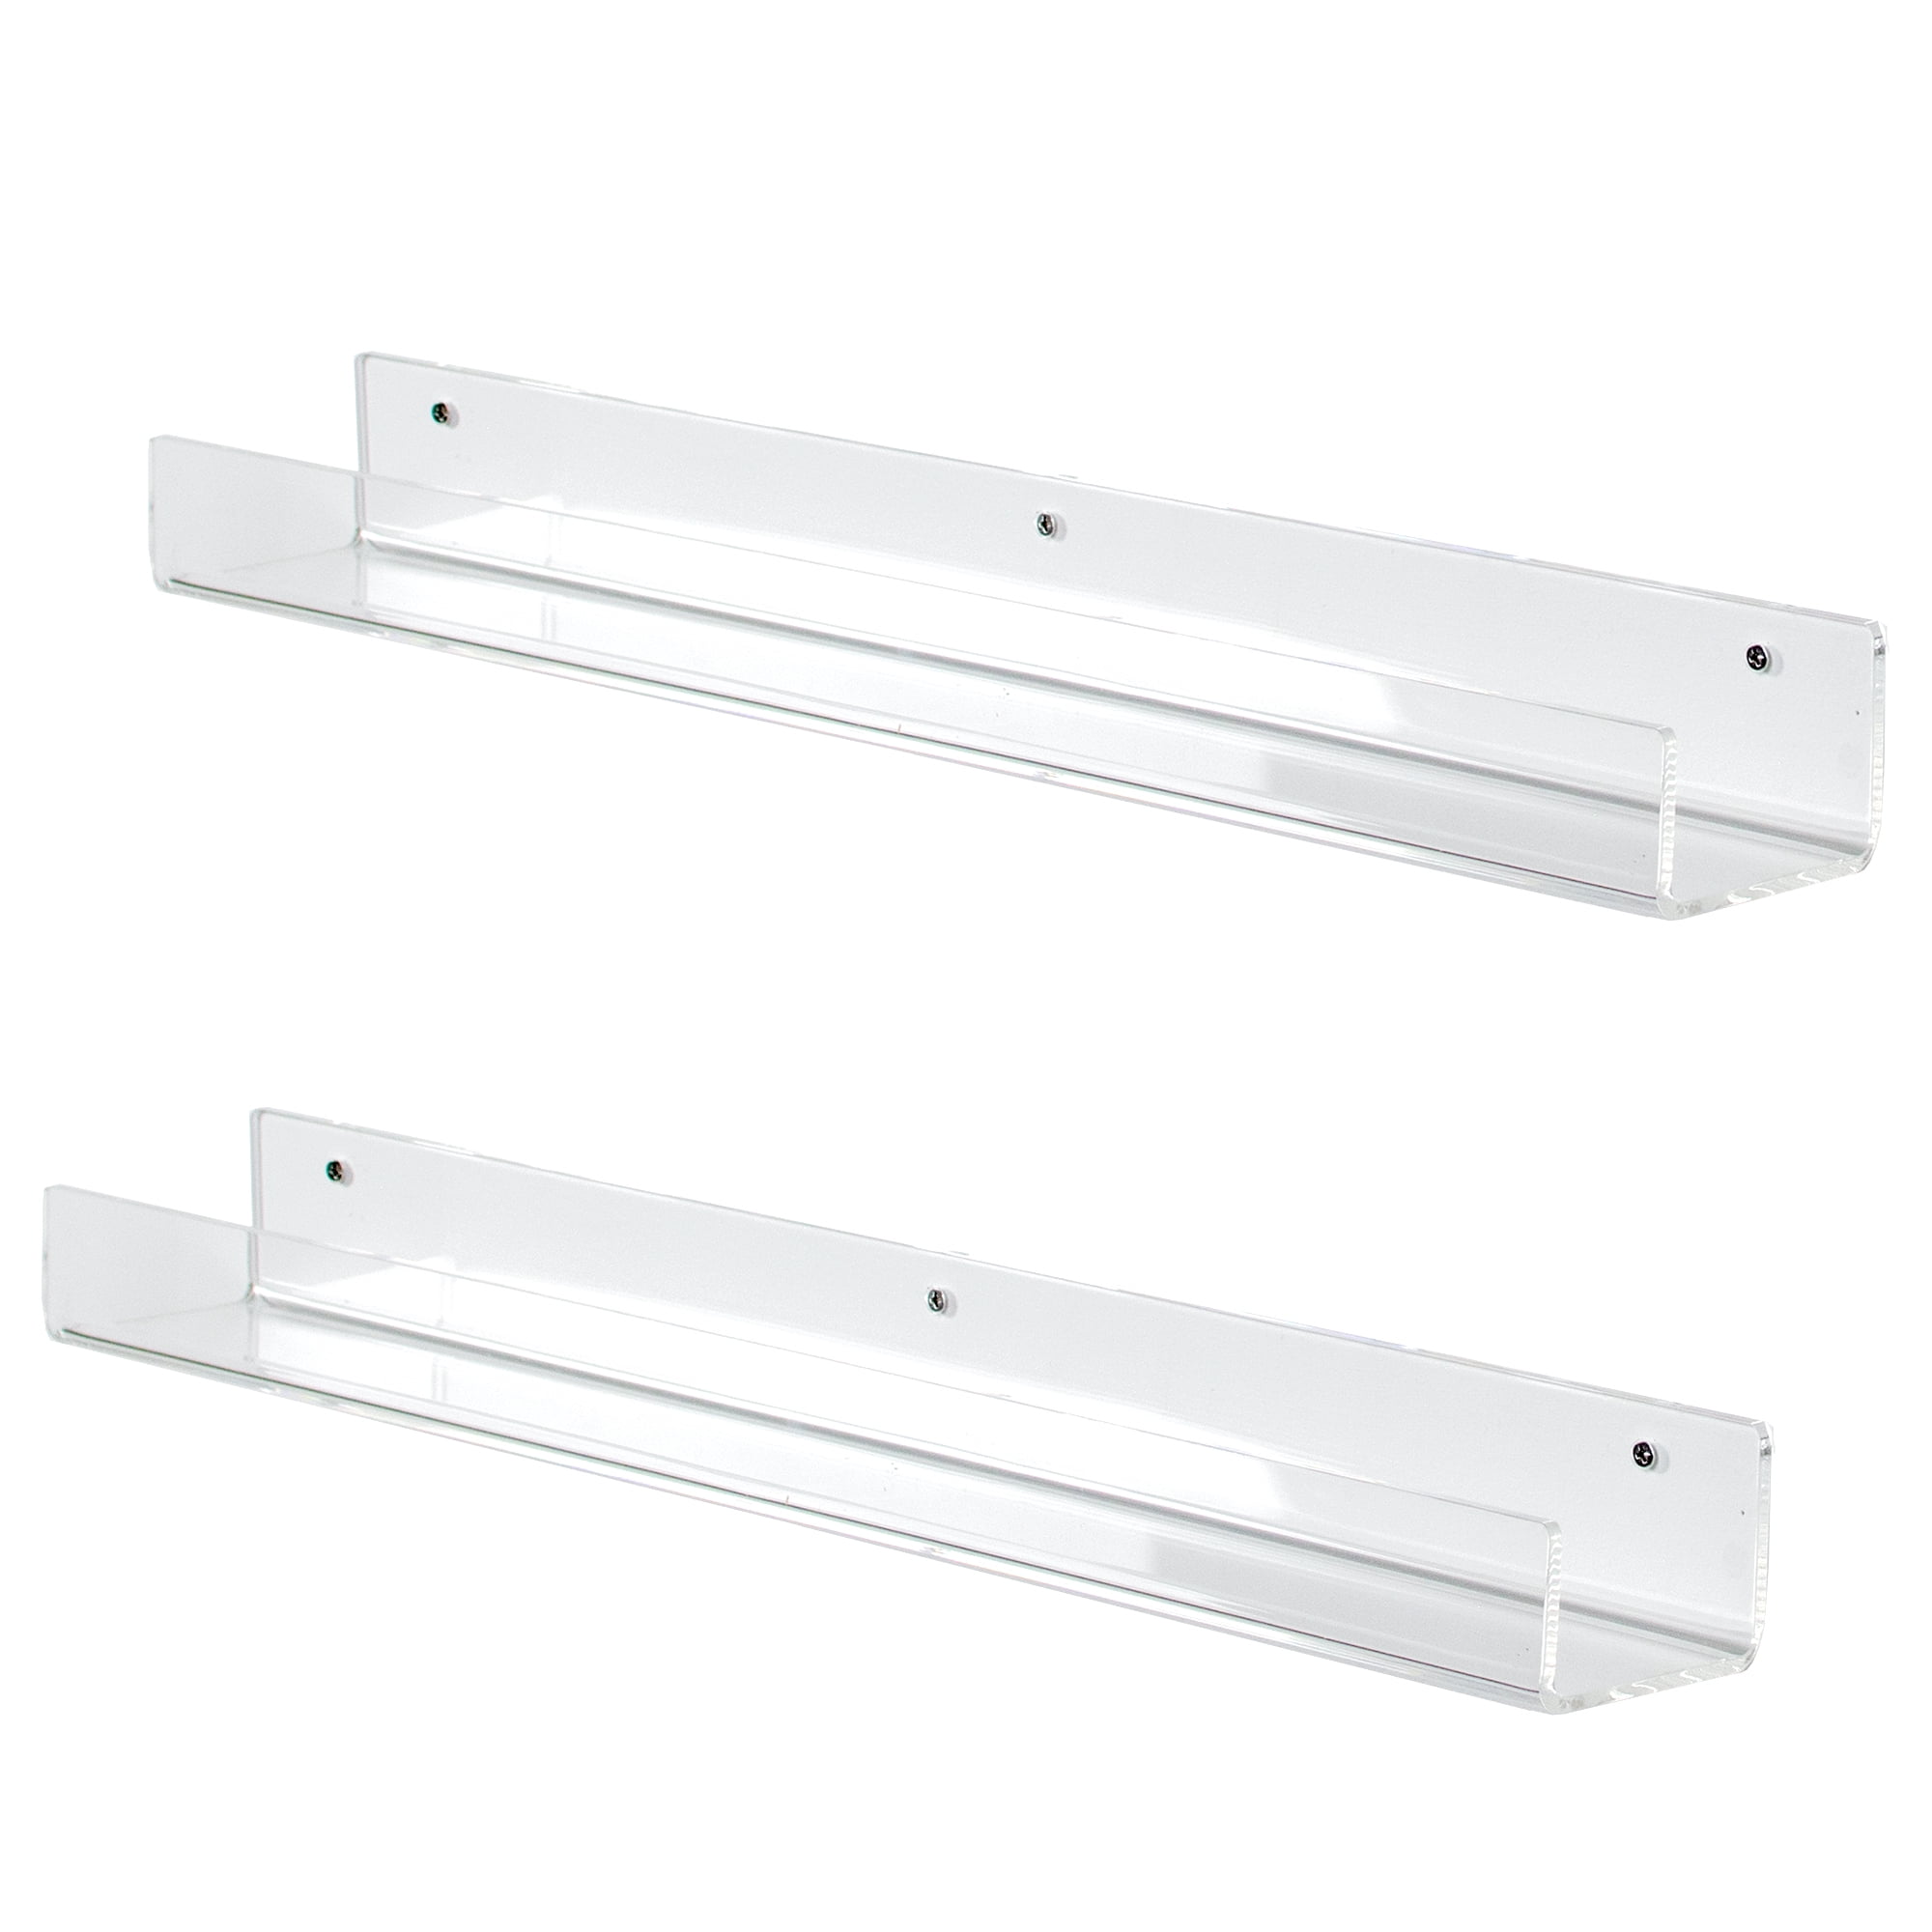 Set of 2 Safety Shelf Holder Stand Display Acrylic Floating Shelves White/Black 